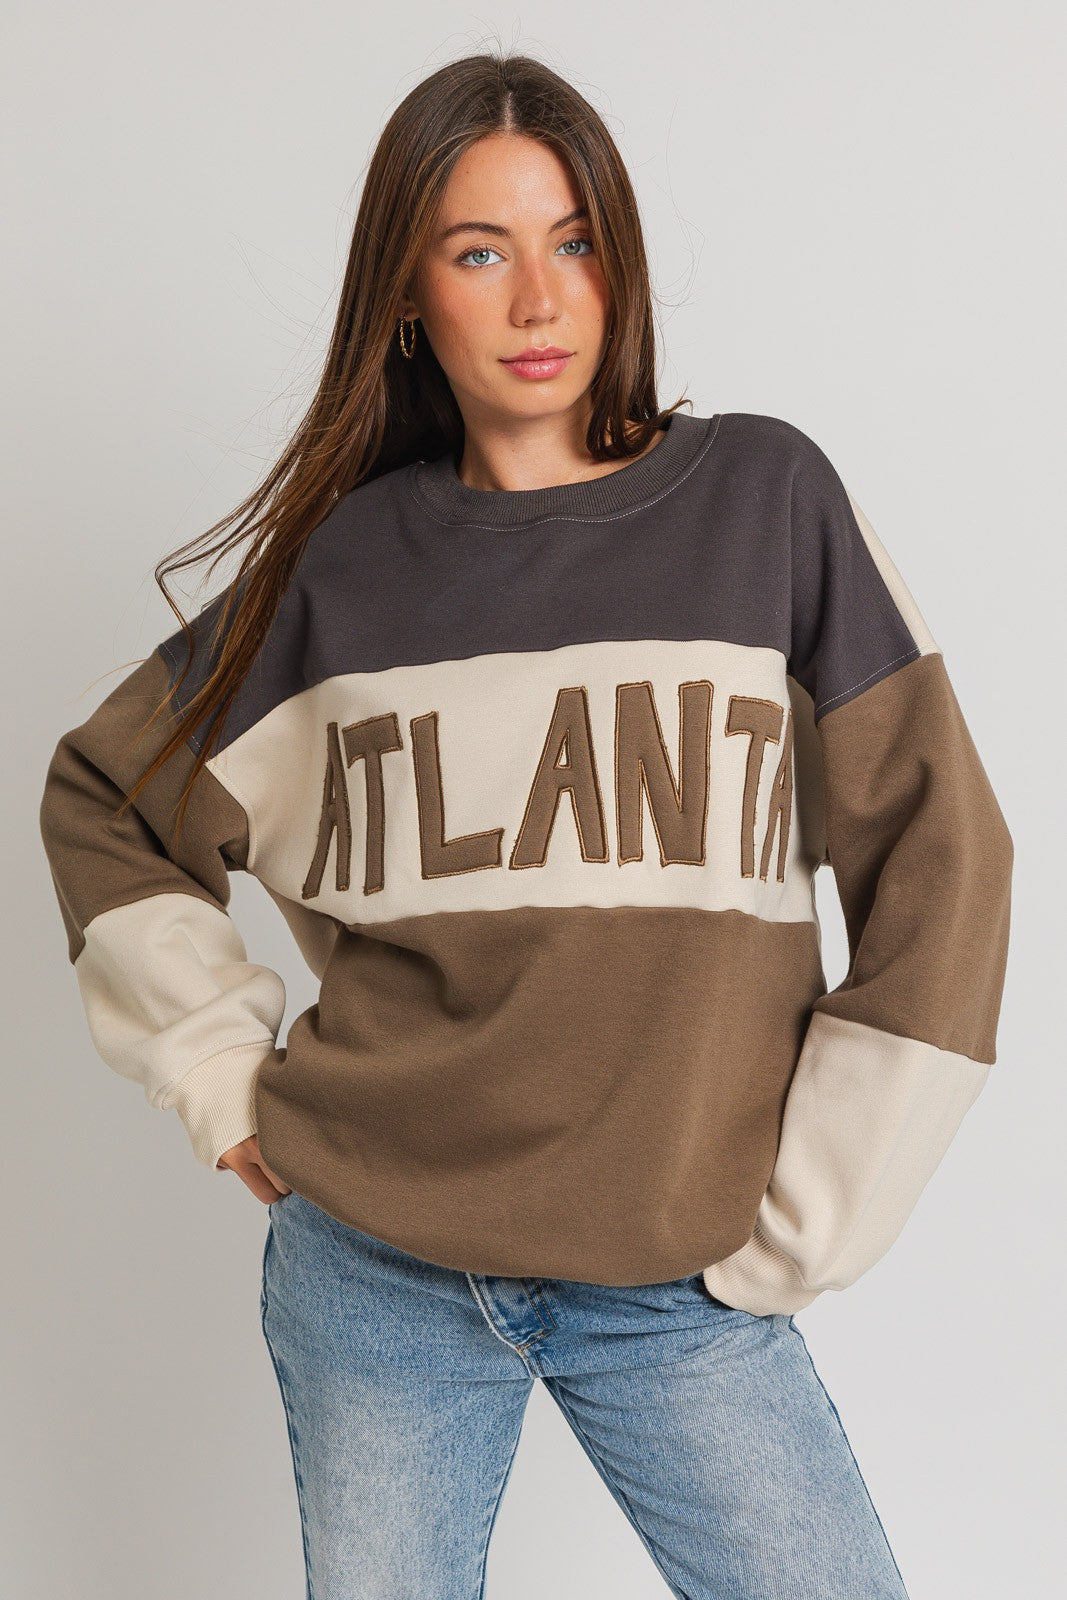 Atlanta Sweatshirt